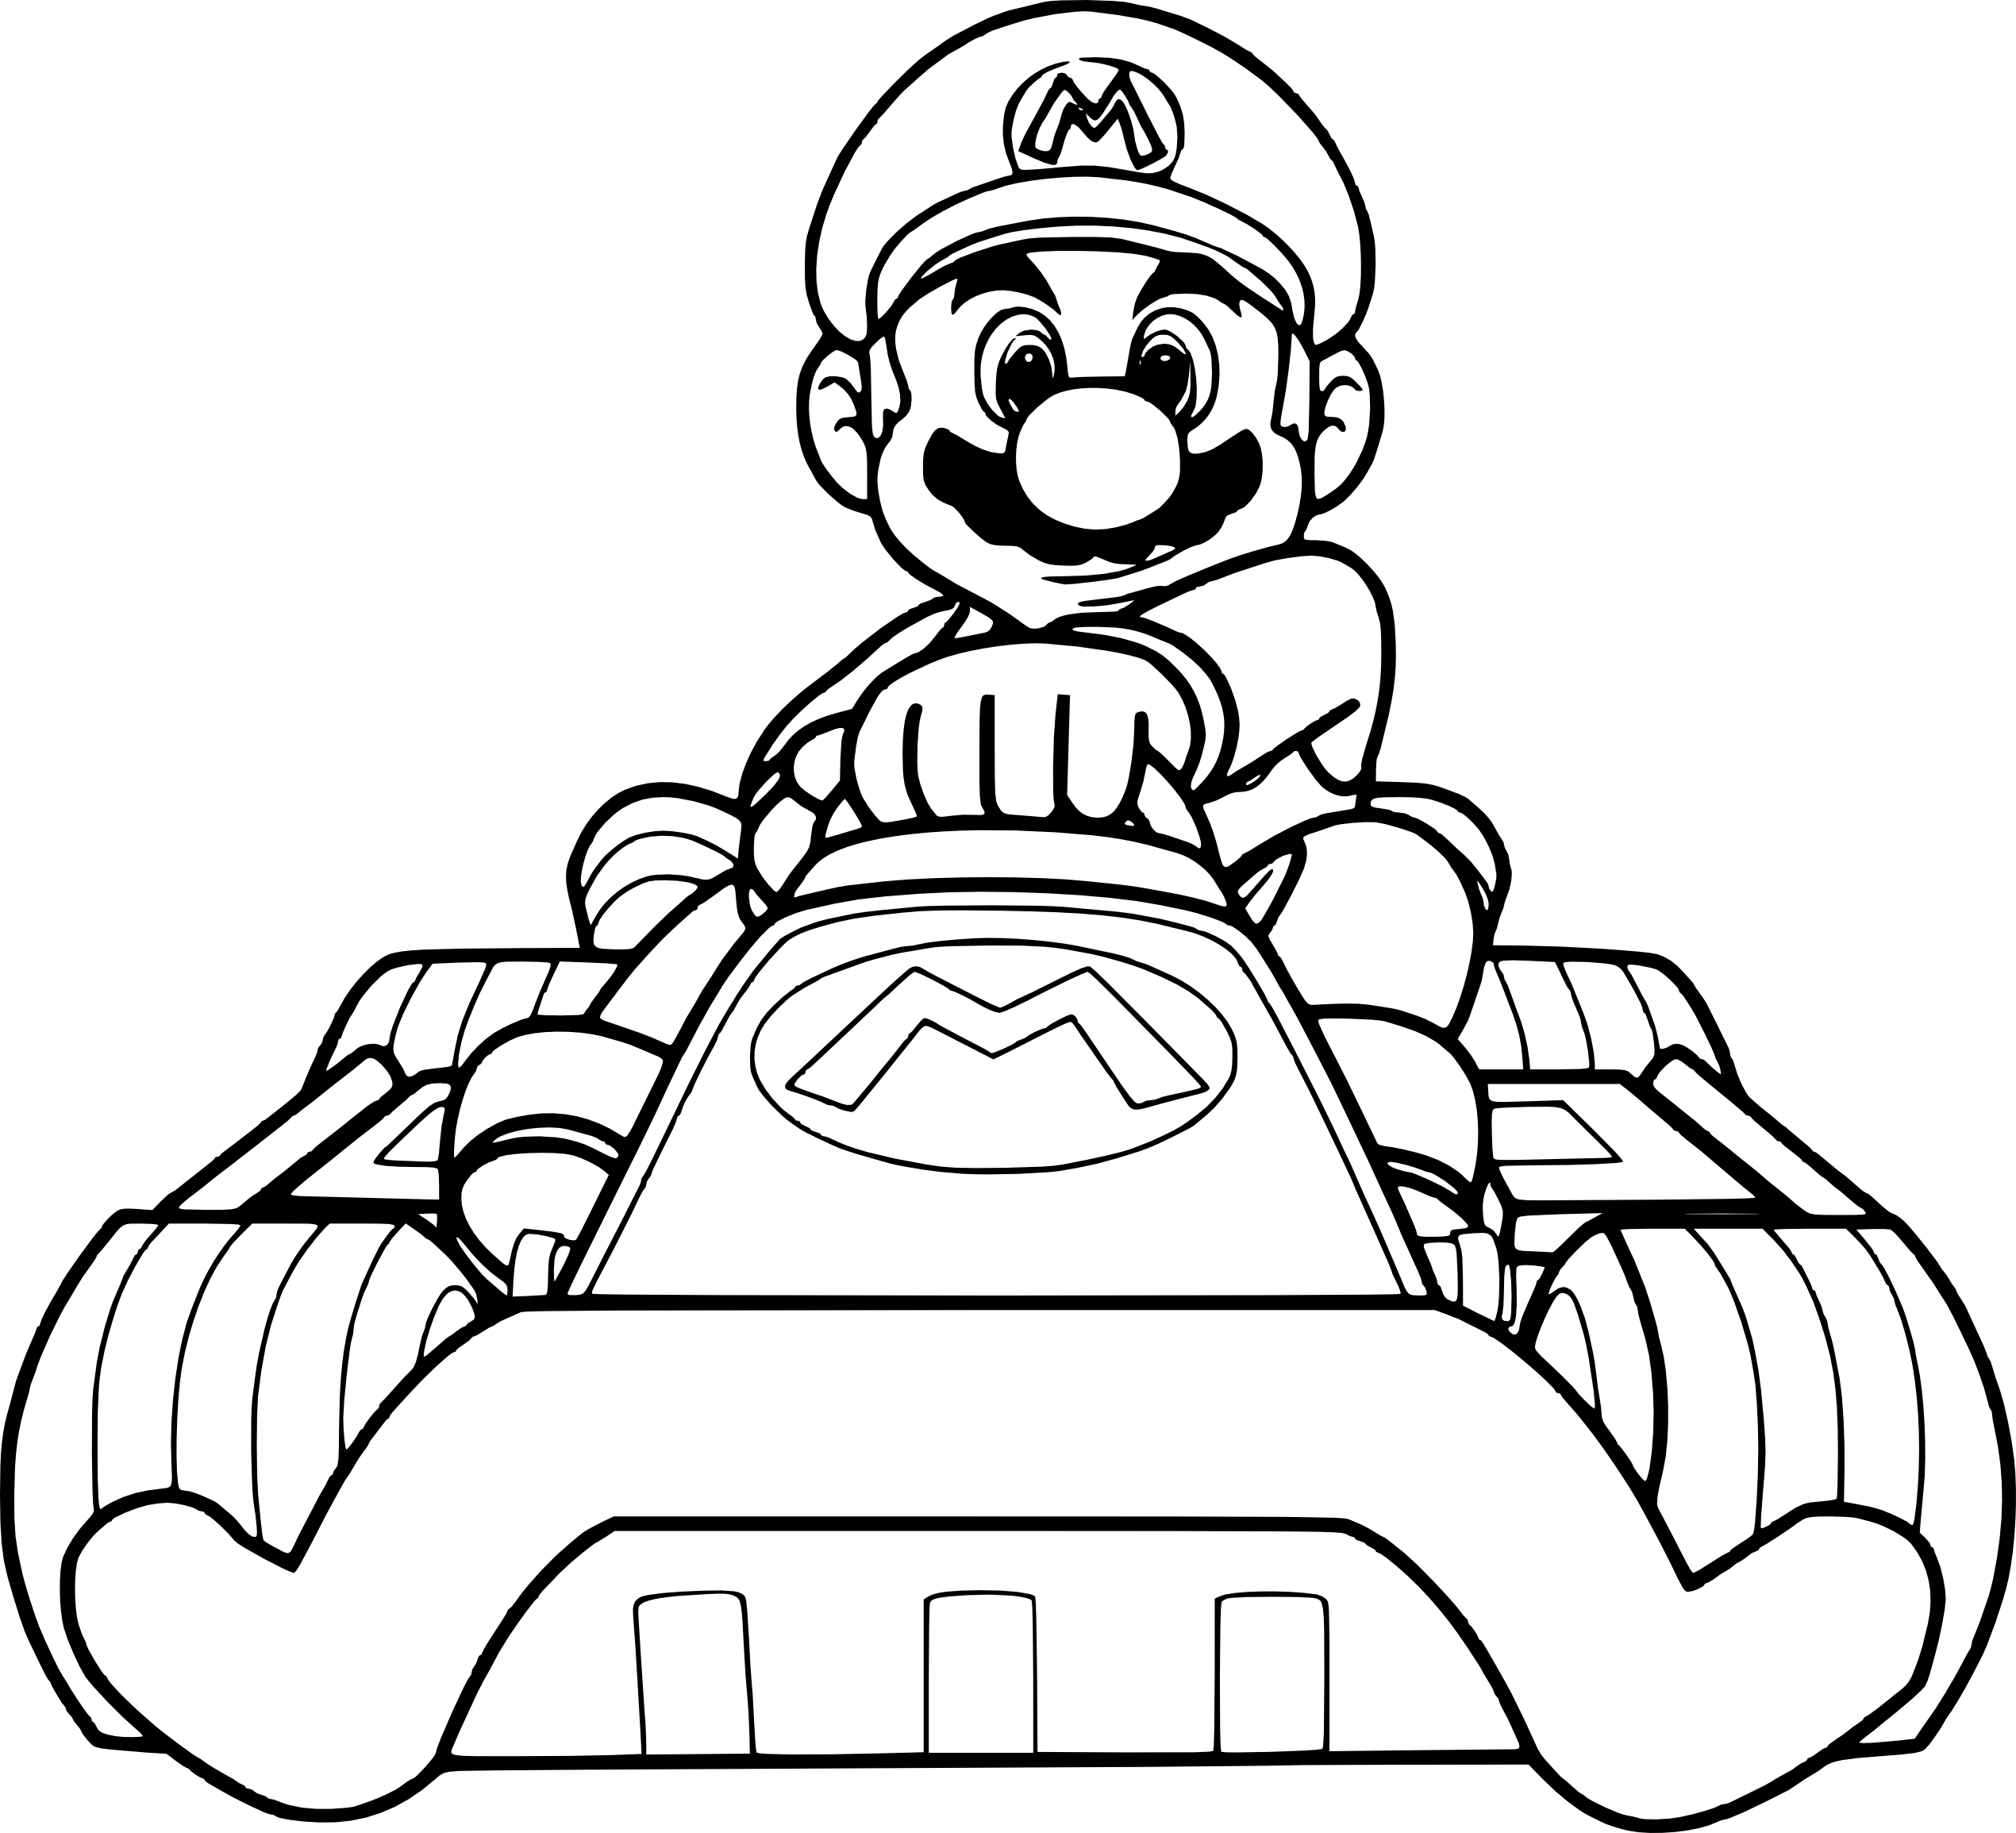 Mario Kart coloring page